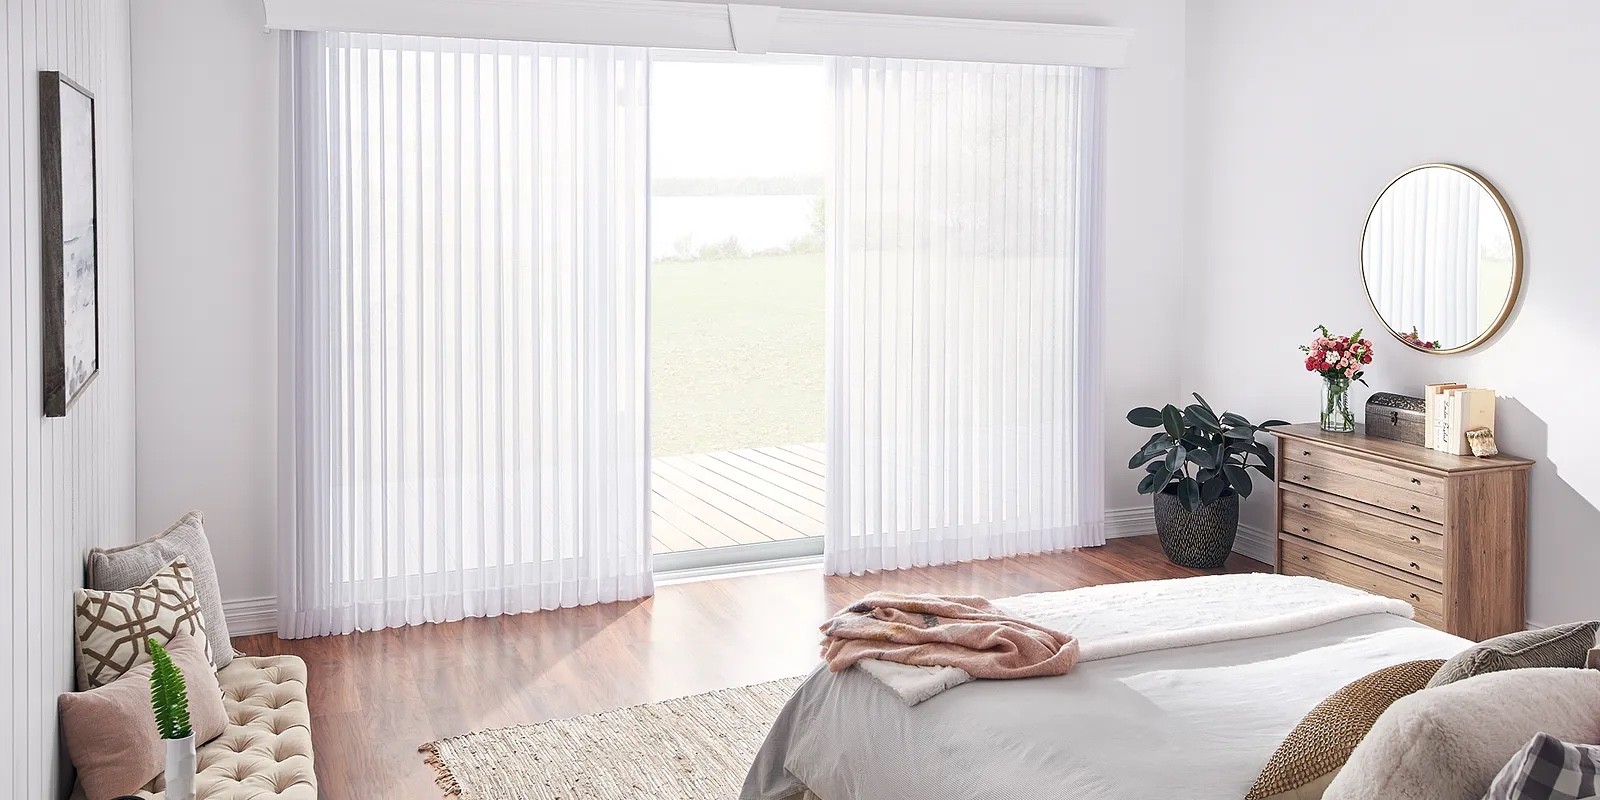 Vertical blinds | Panter's Hardwood Floors & More